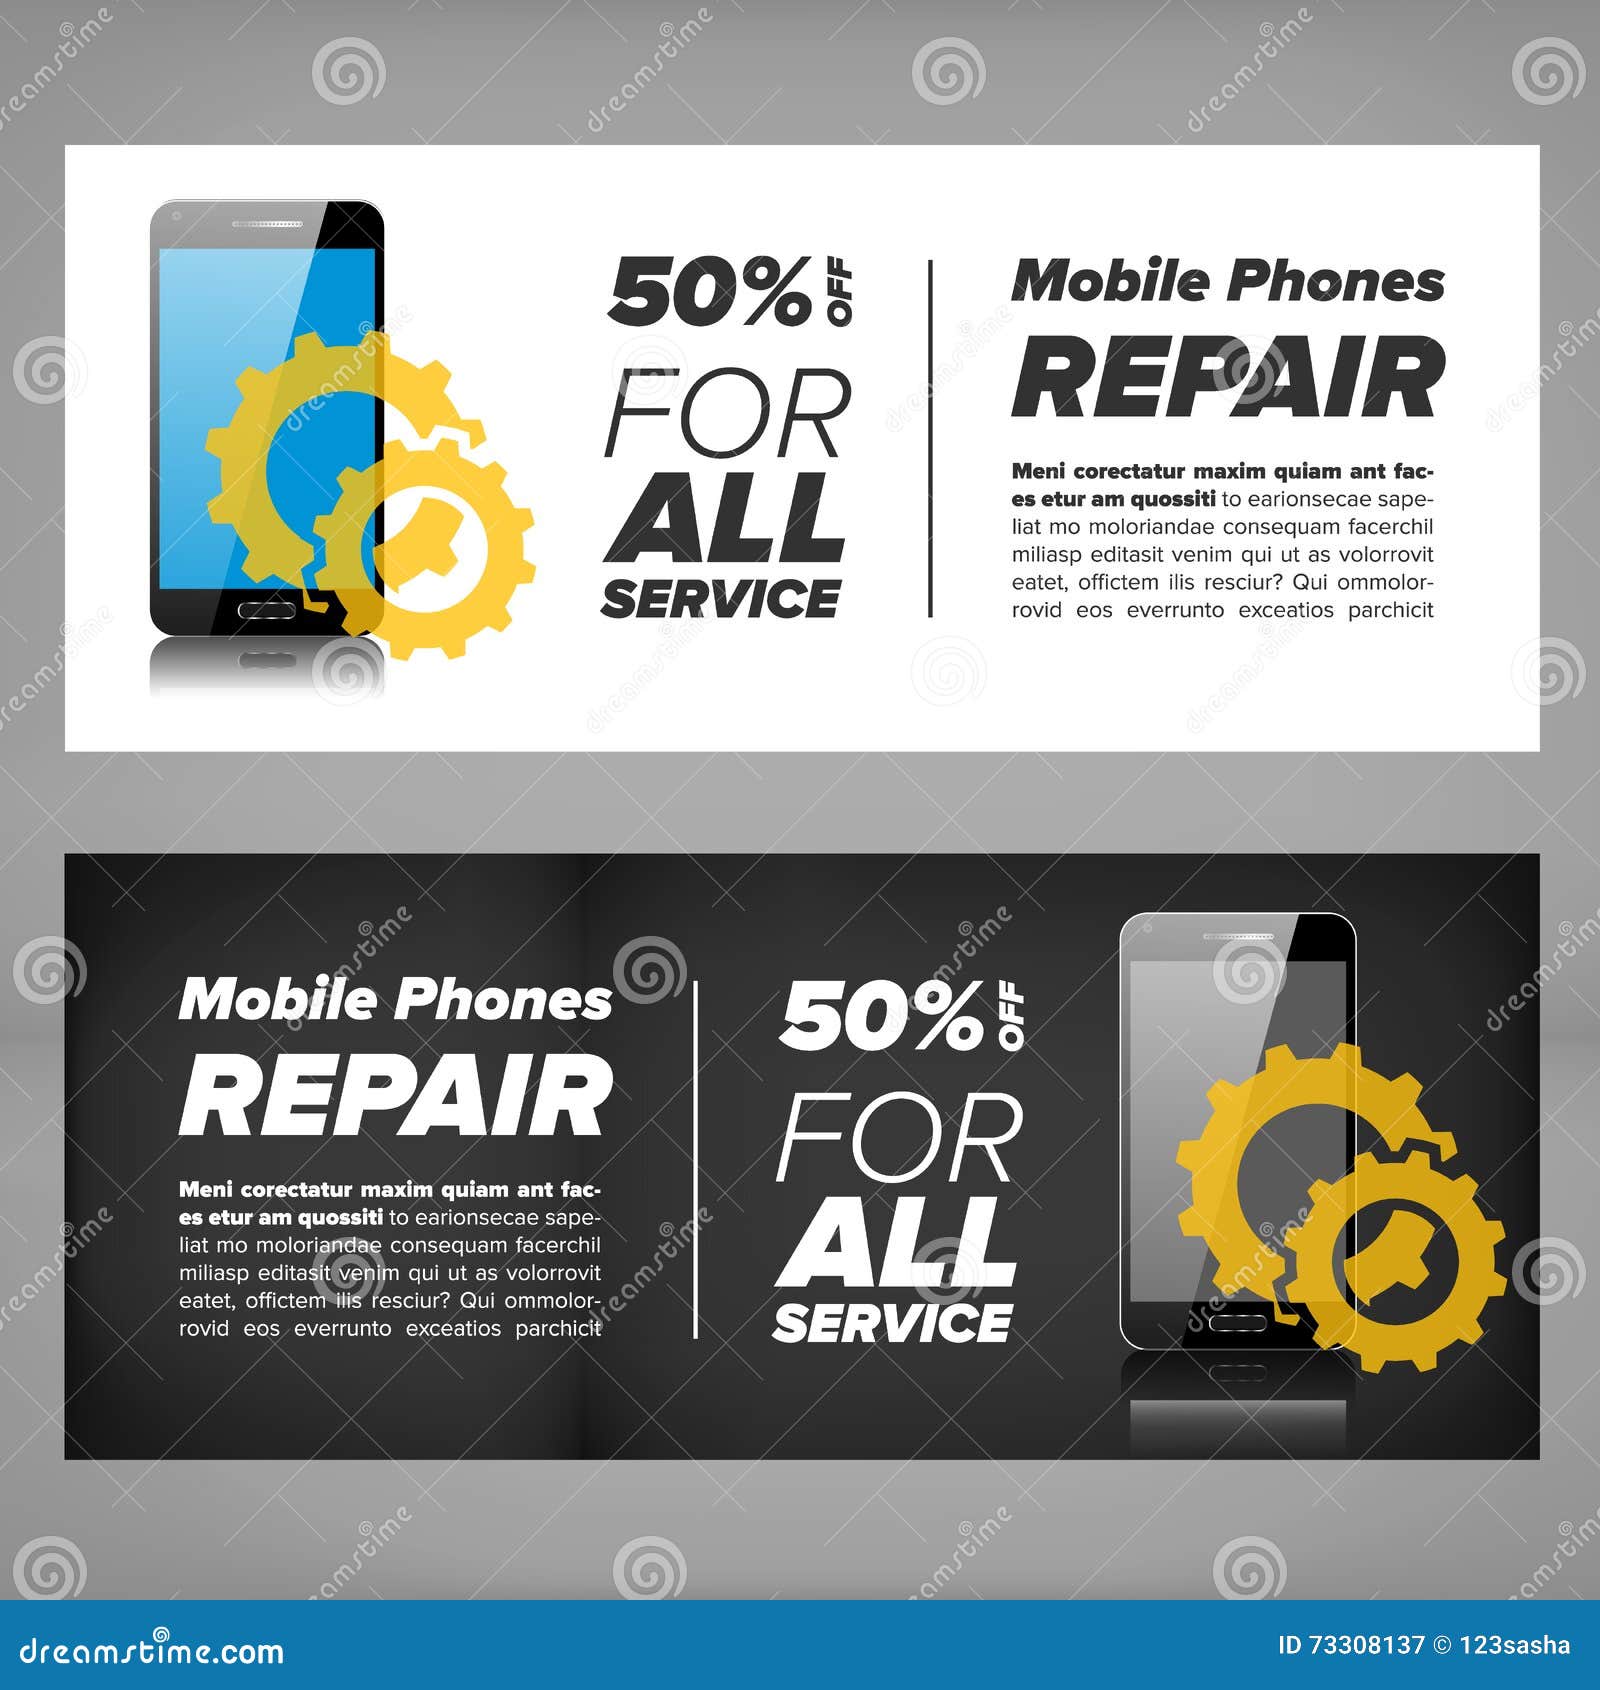 Smart phone repair banner stock vector. Illustration of banner - 73308137